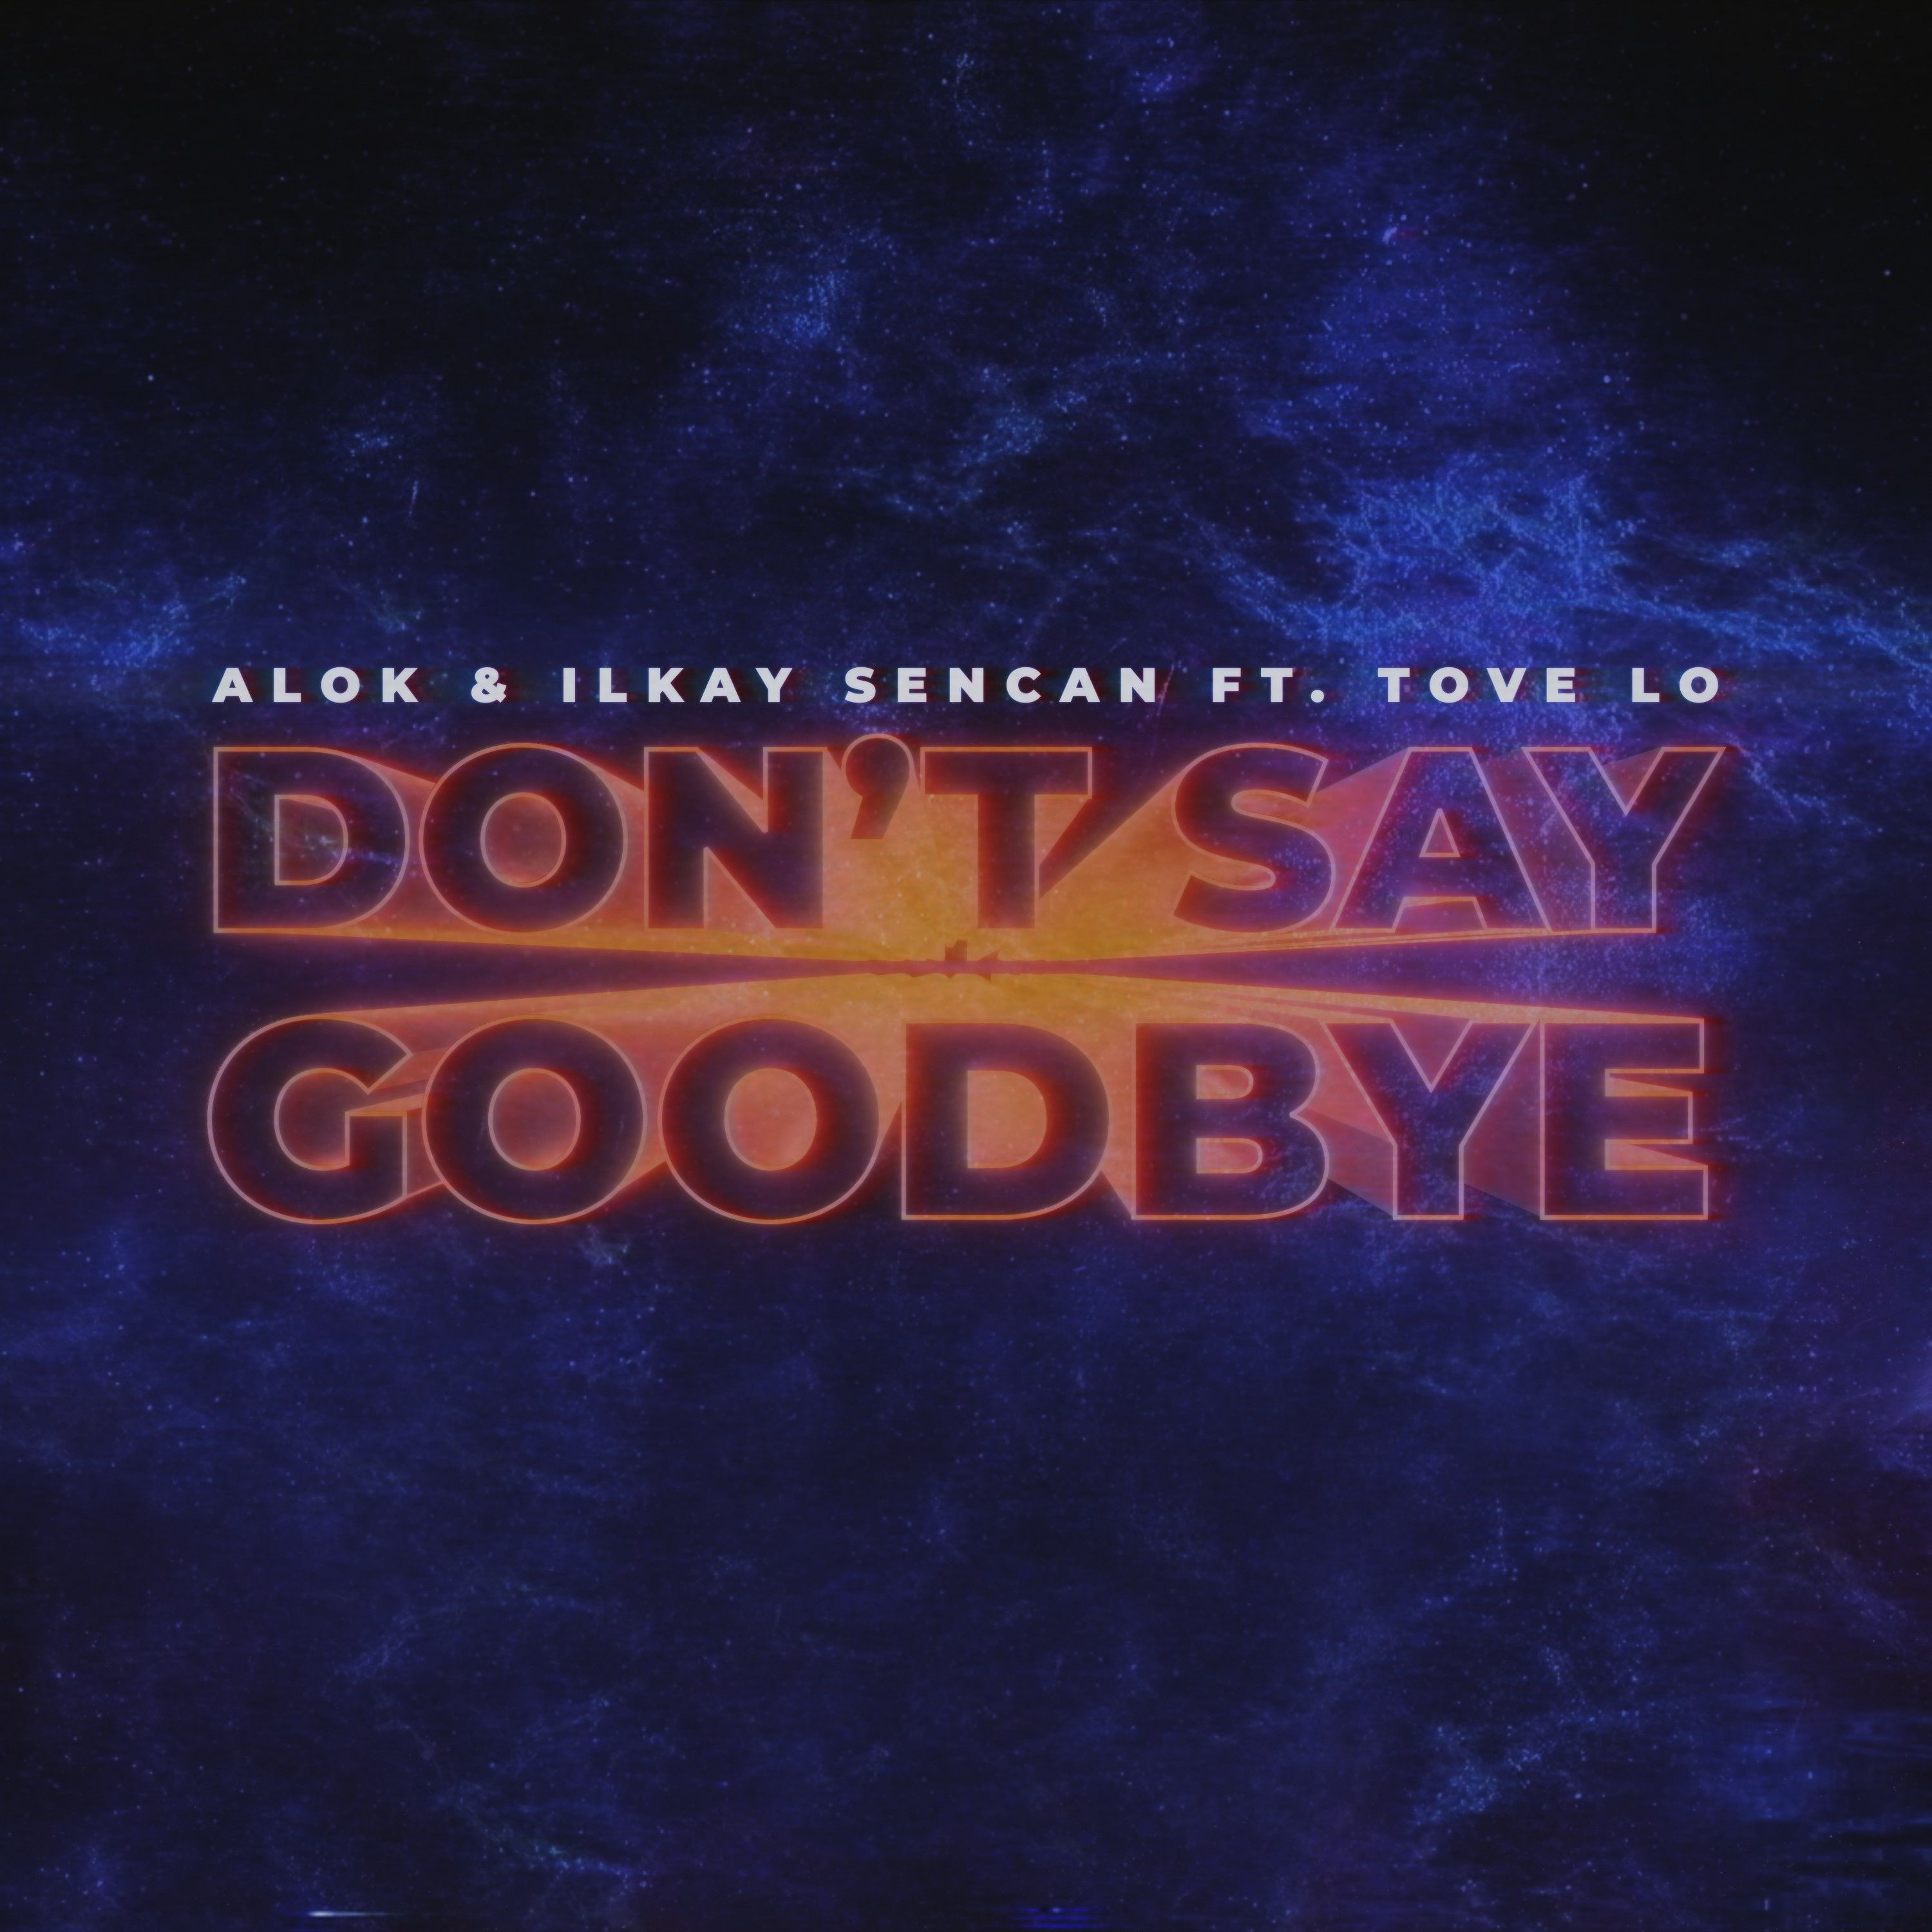 Imagem do álbum Don't Say Goodbye do(a) artista Alok